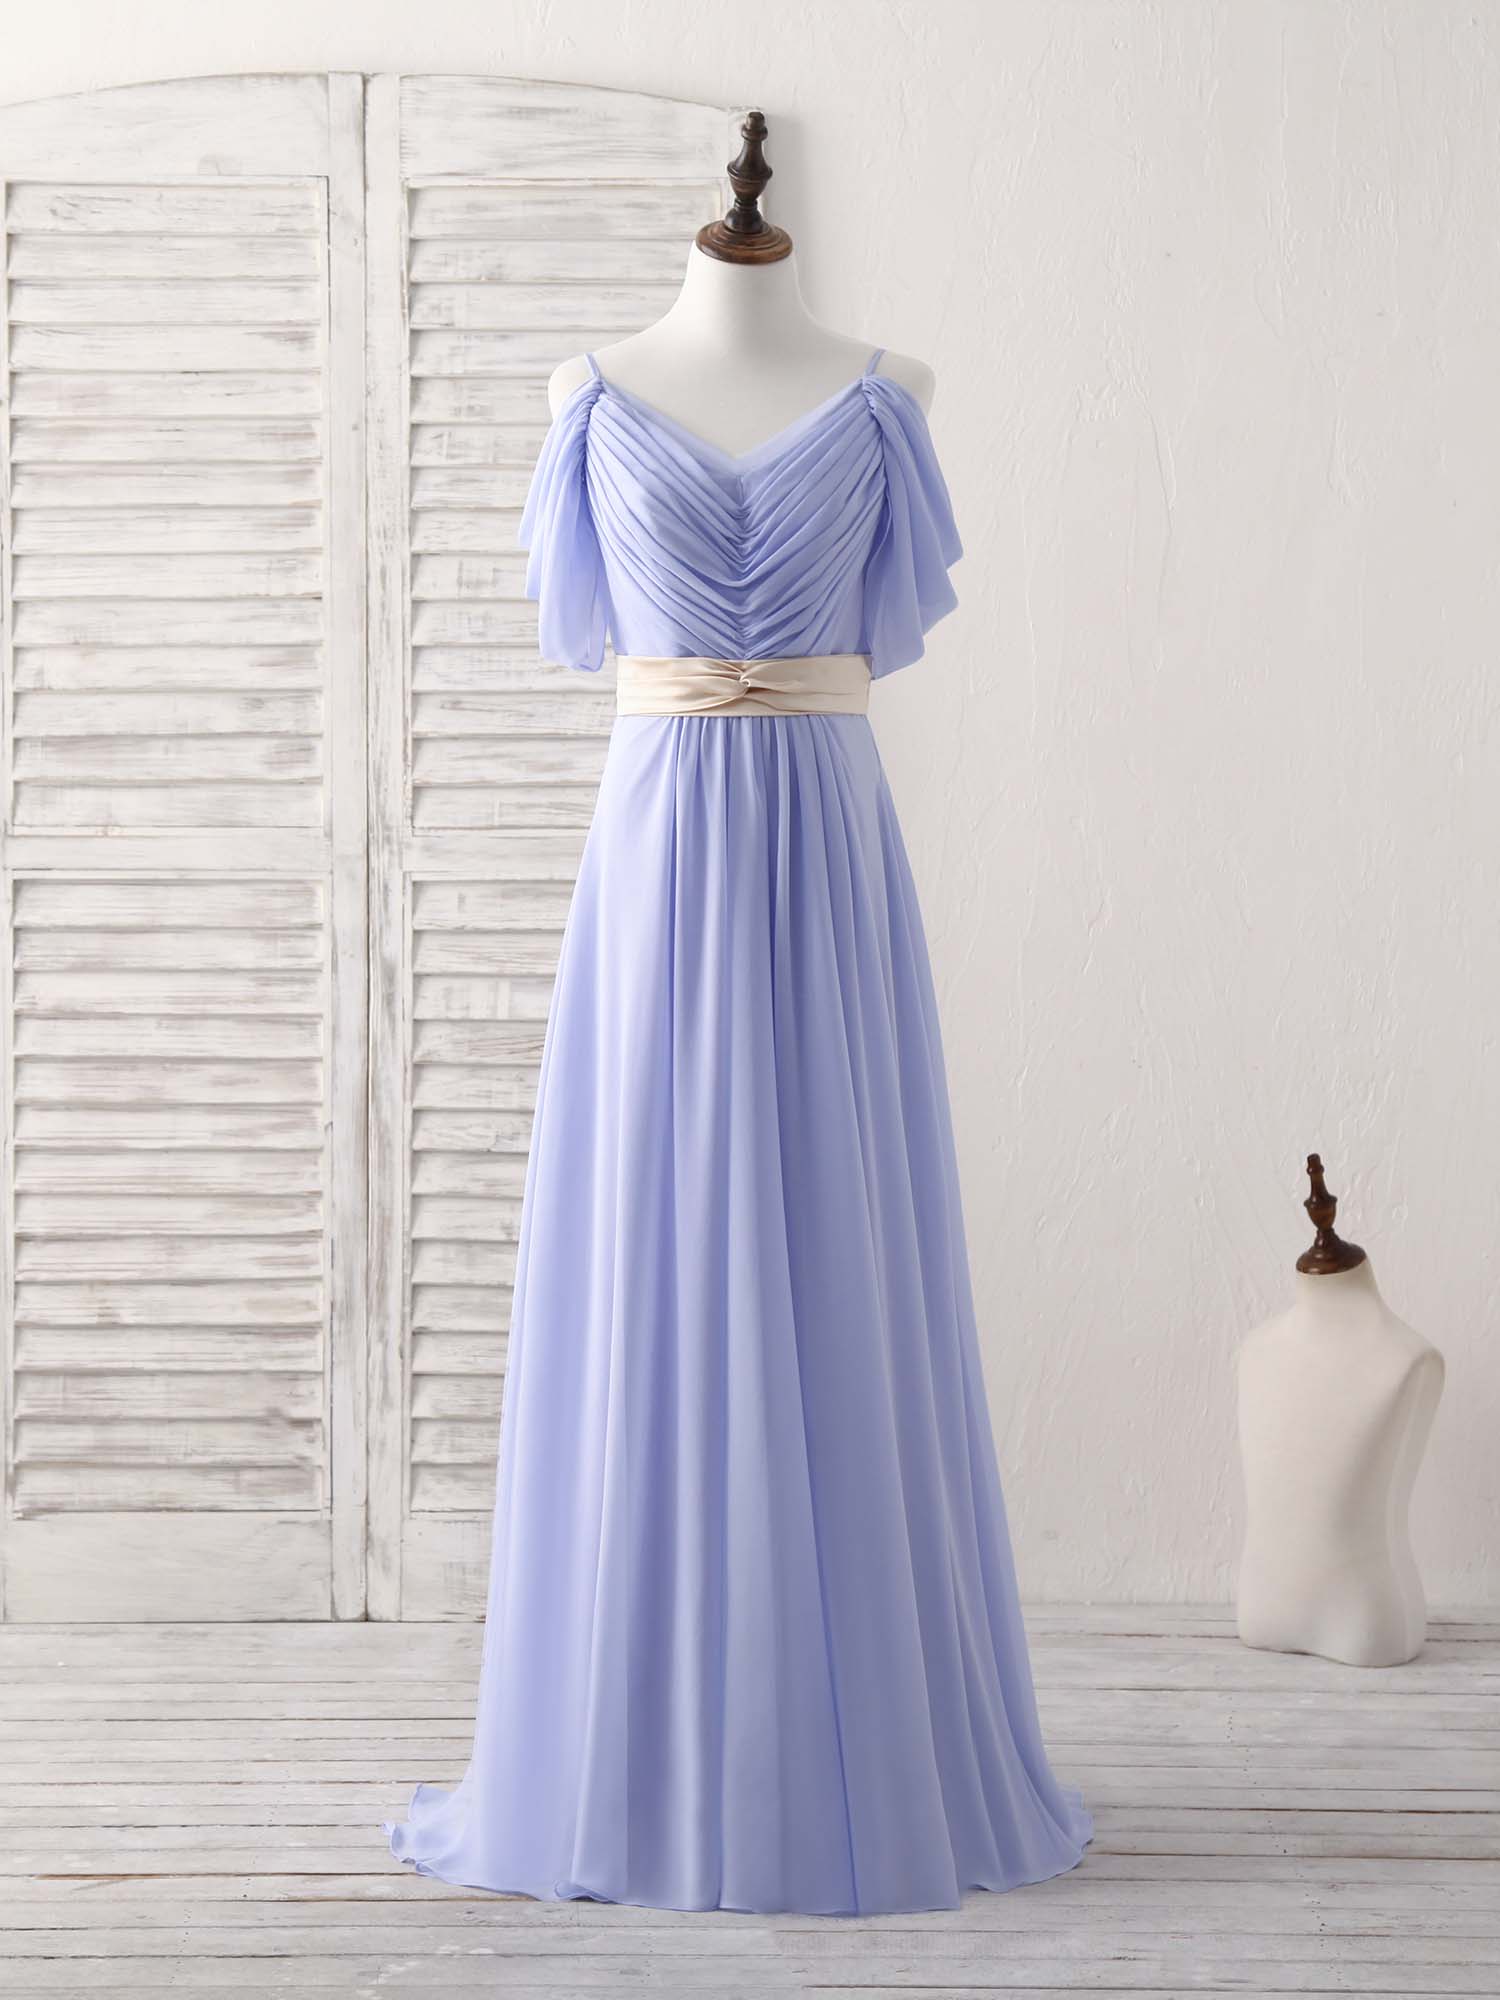 Simple V Neck Off Shoulder Chiffon Long Corset Prom Dress Evening Dress outfit, Party Dress Code Ideas